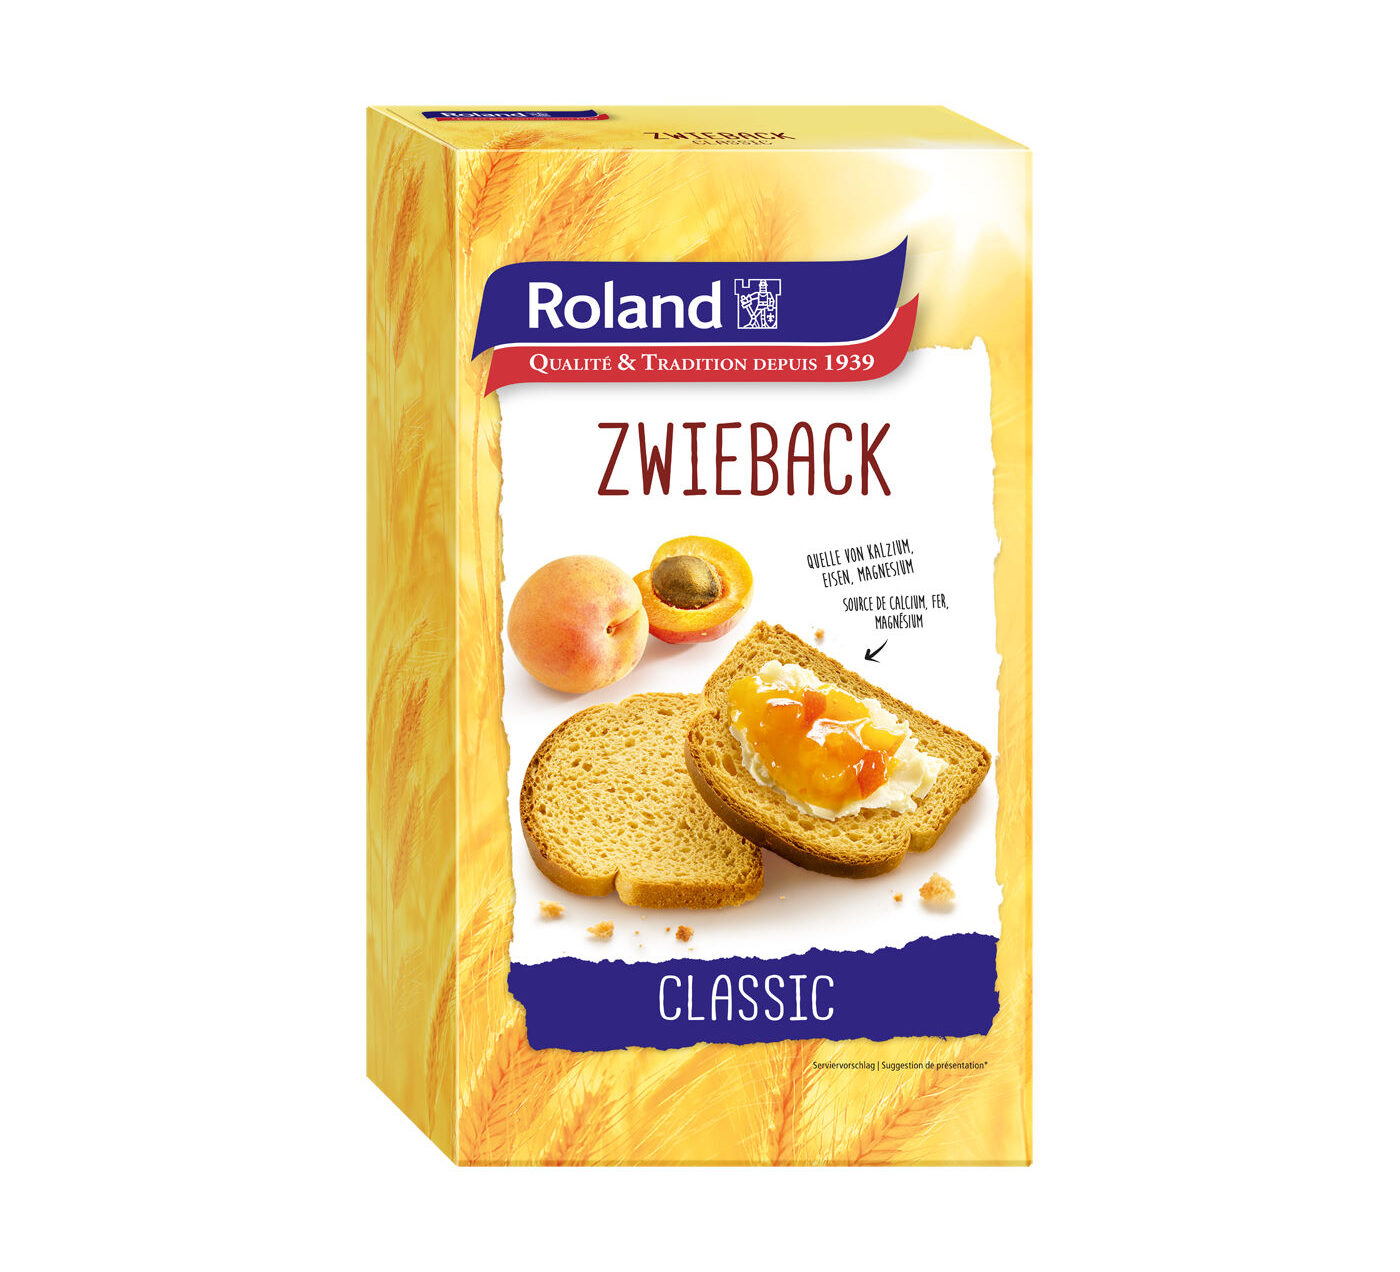 Roland-Zwieback-Classic-250g-Packshot-2018-KAVALIER-LINKSPNG-WEB-aspect-ratio-11-10